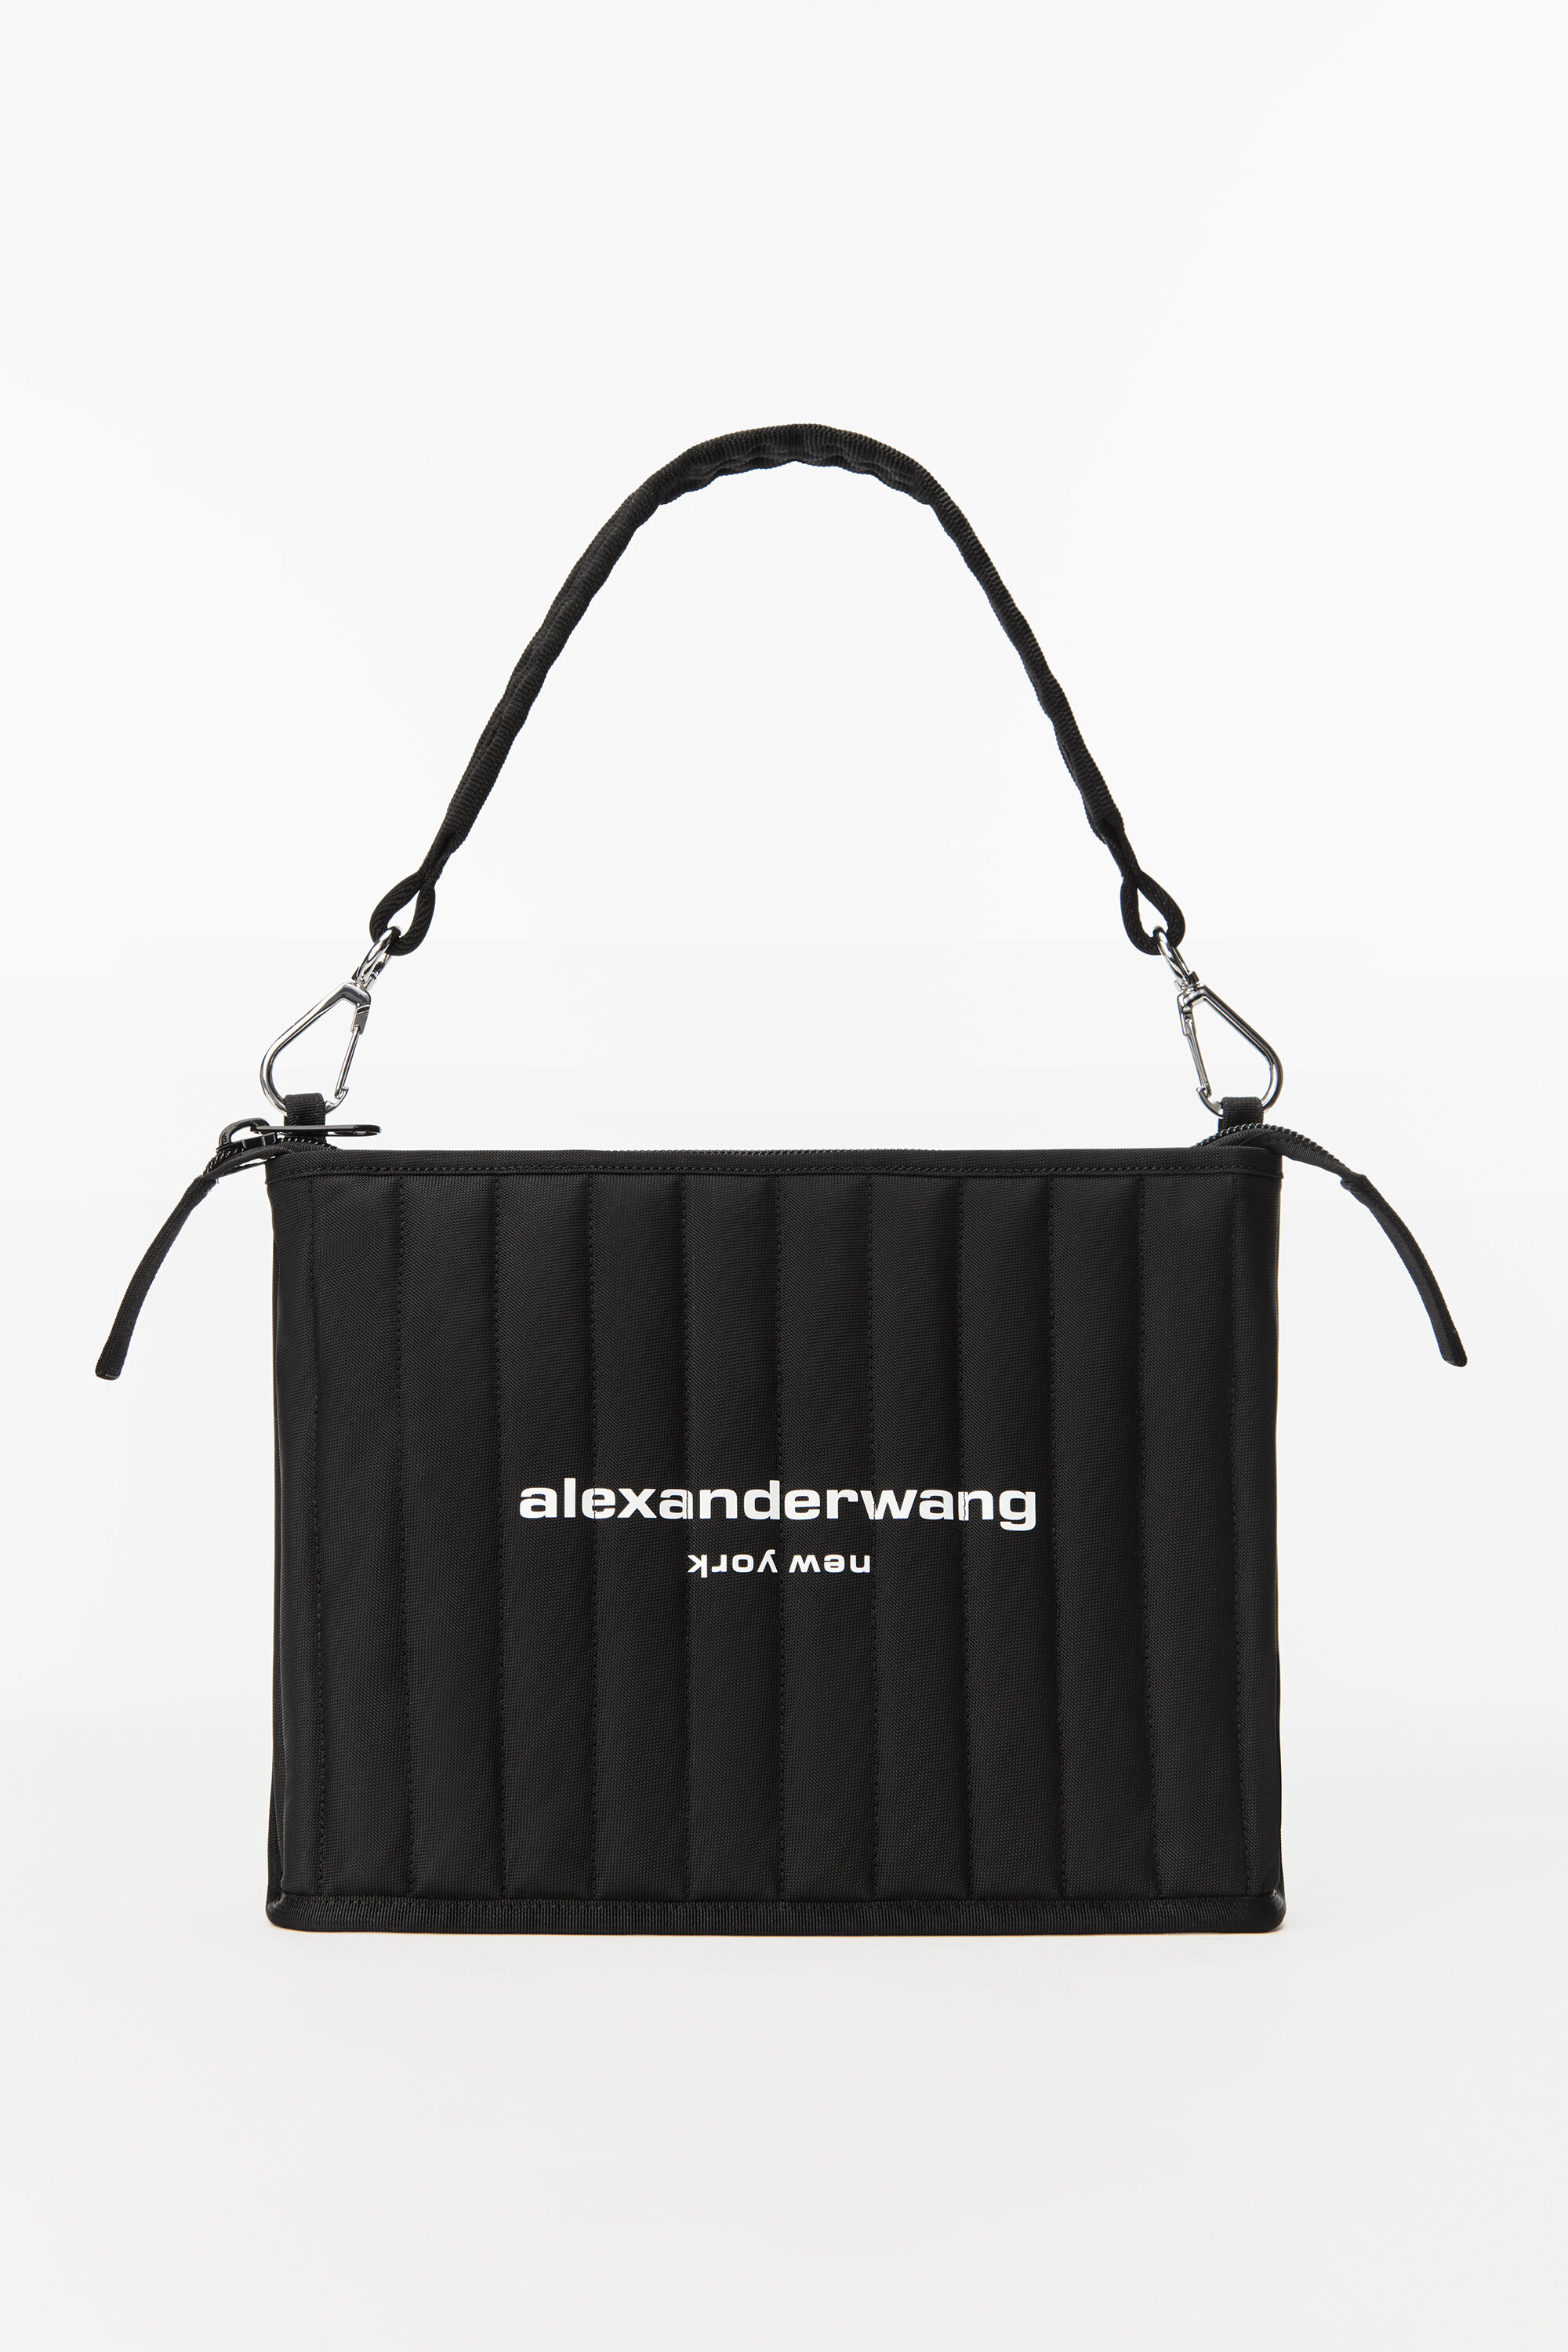 Alexander Wang crystal bag | Crystal bags, Alexander wang bag, Bags